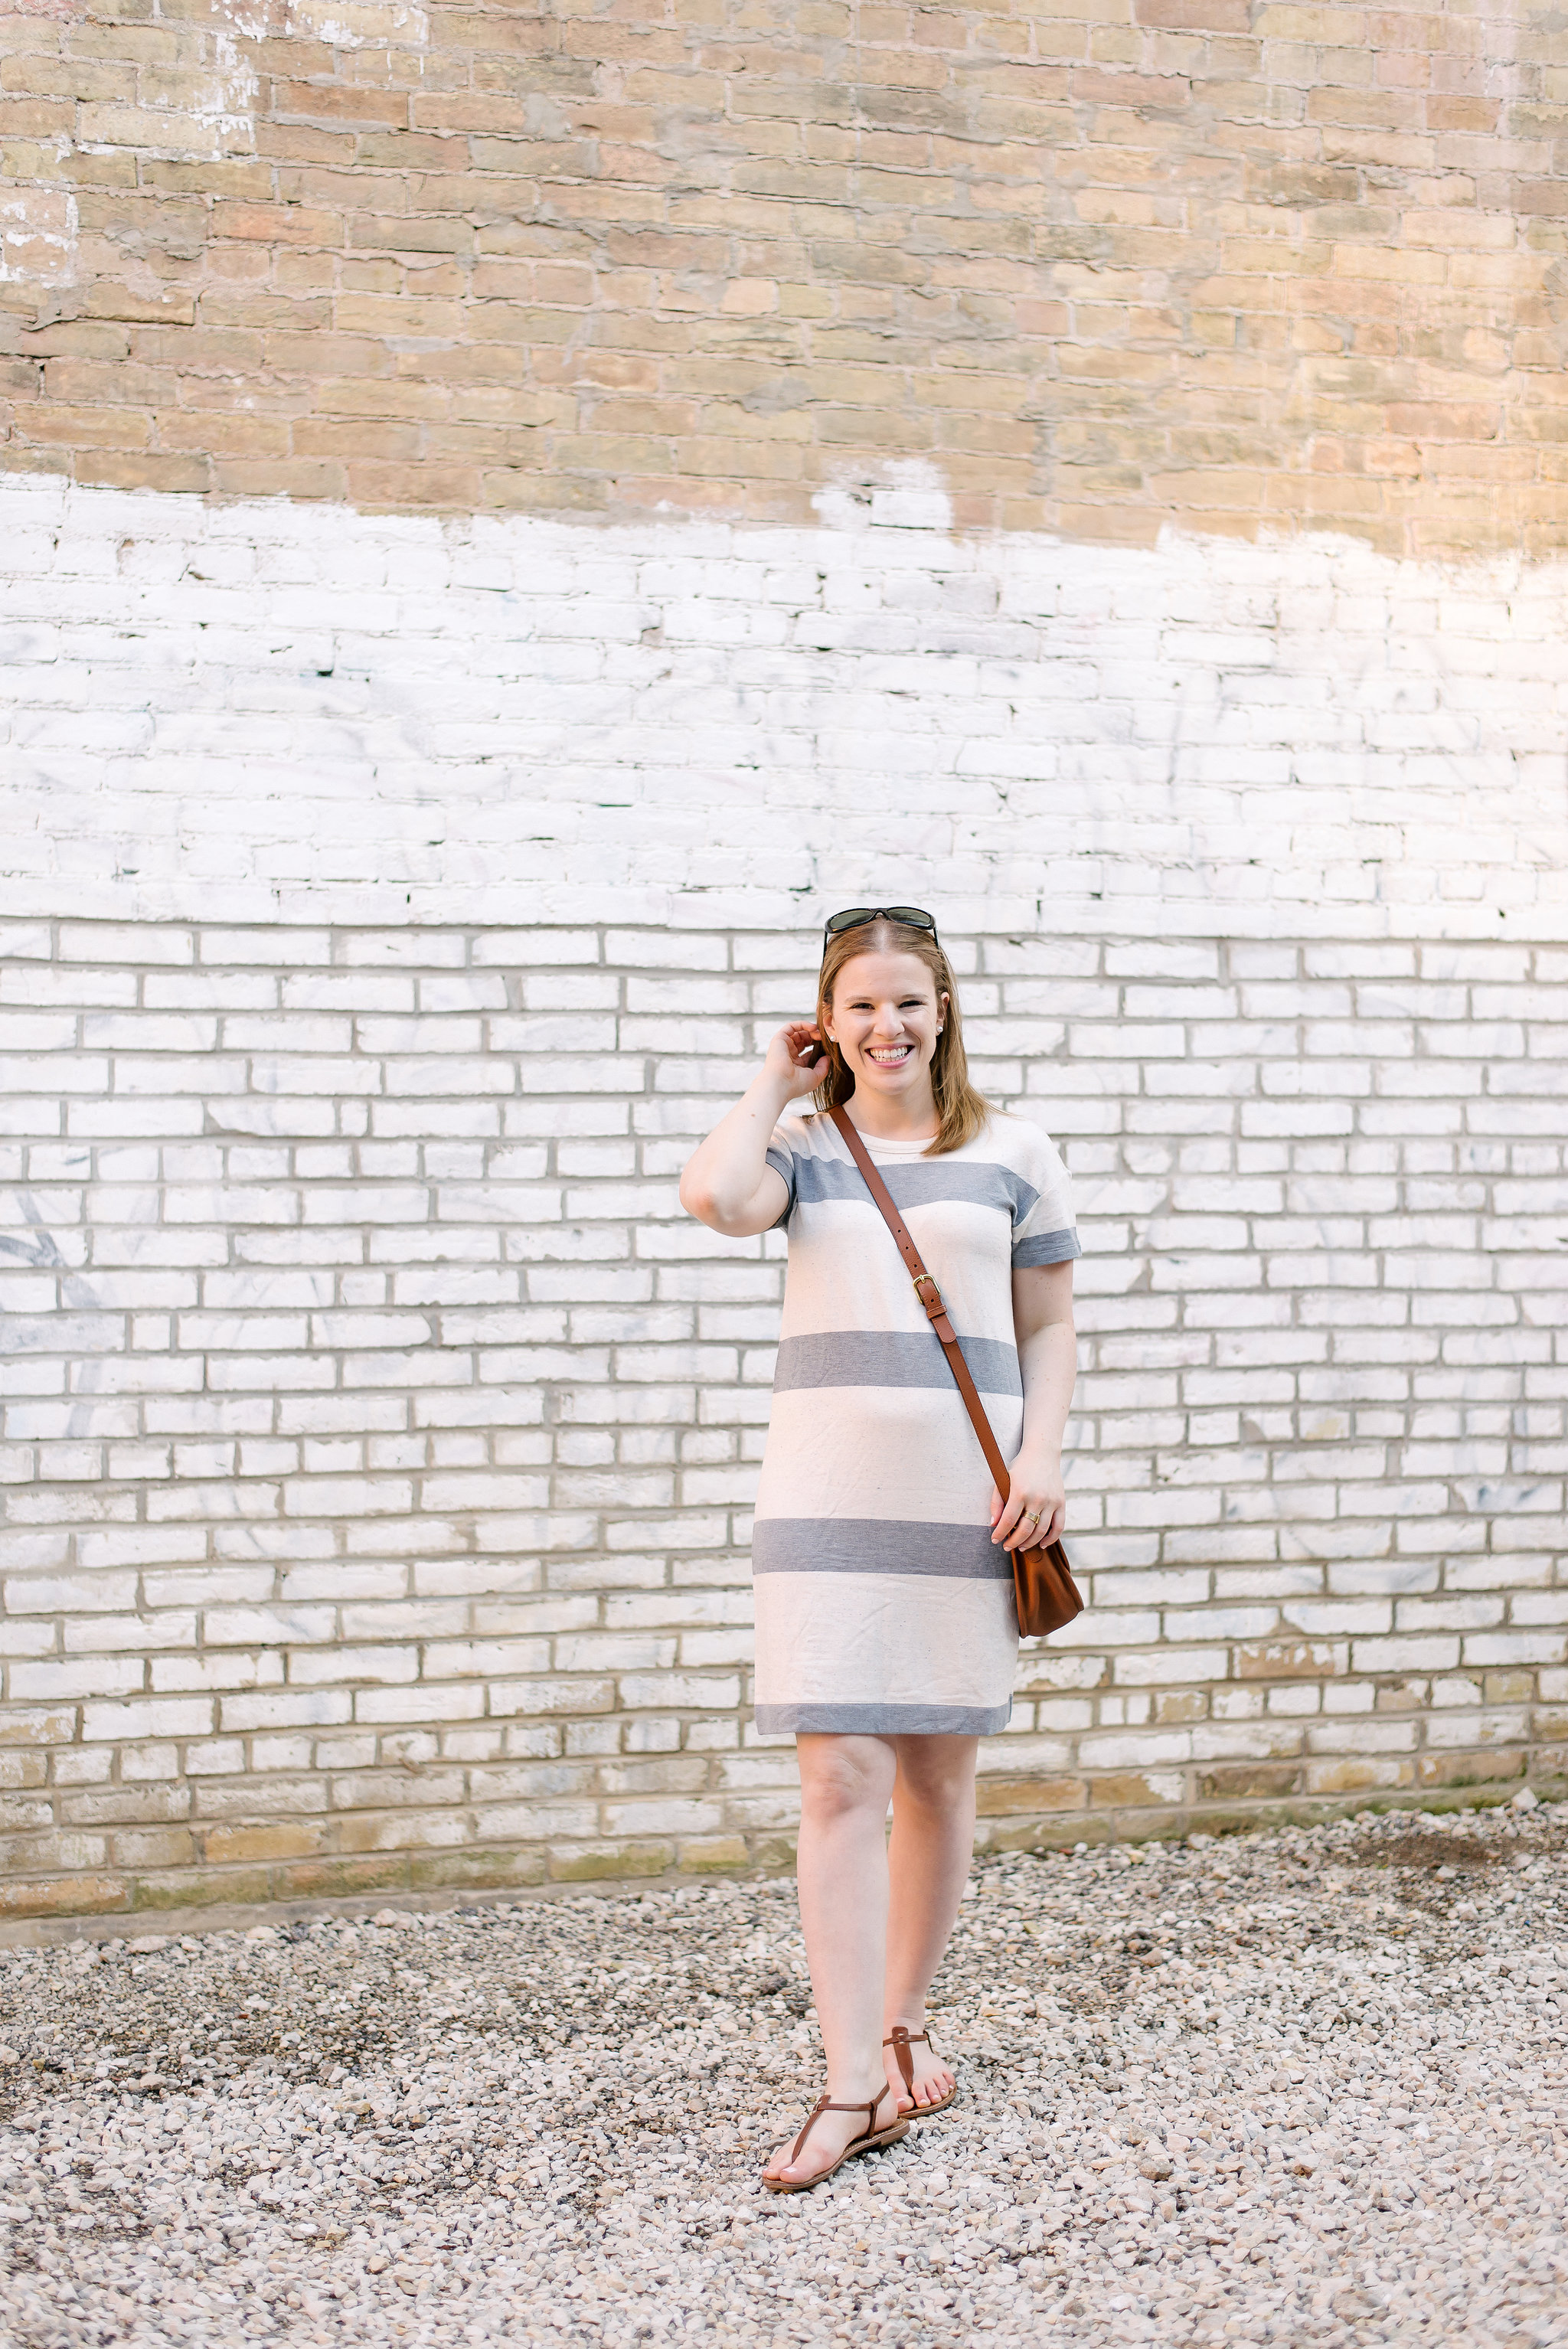 The Striped Tee Dress | Something Good, @danaerinw , fashion, style, summer